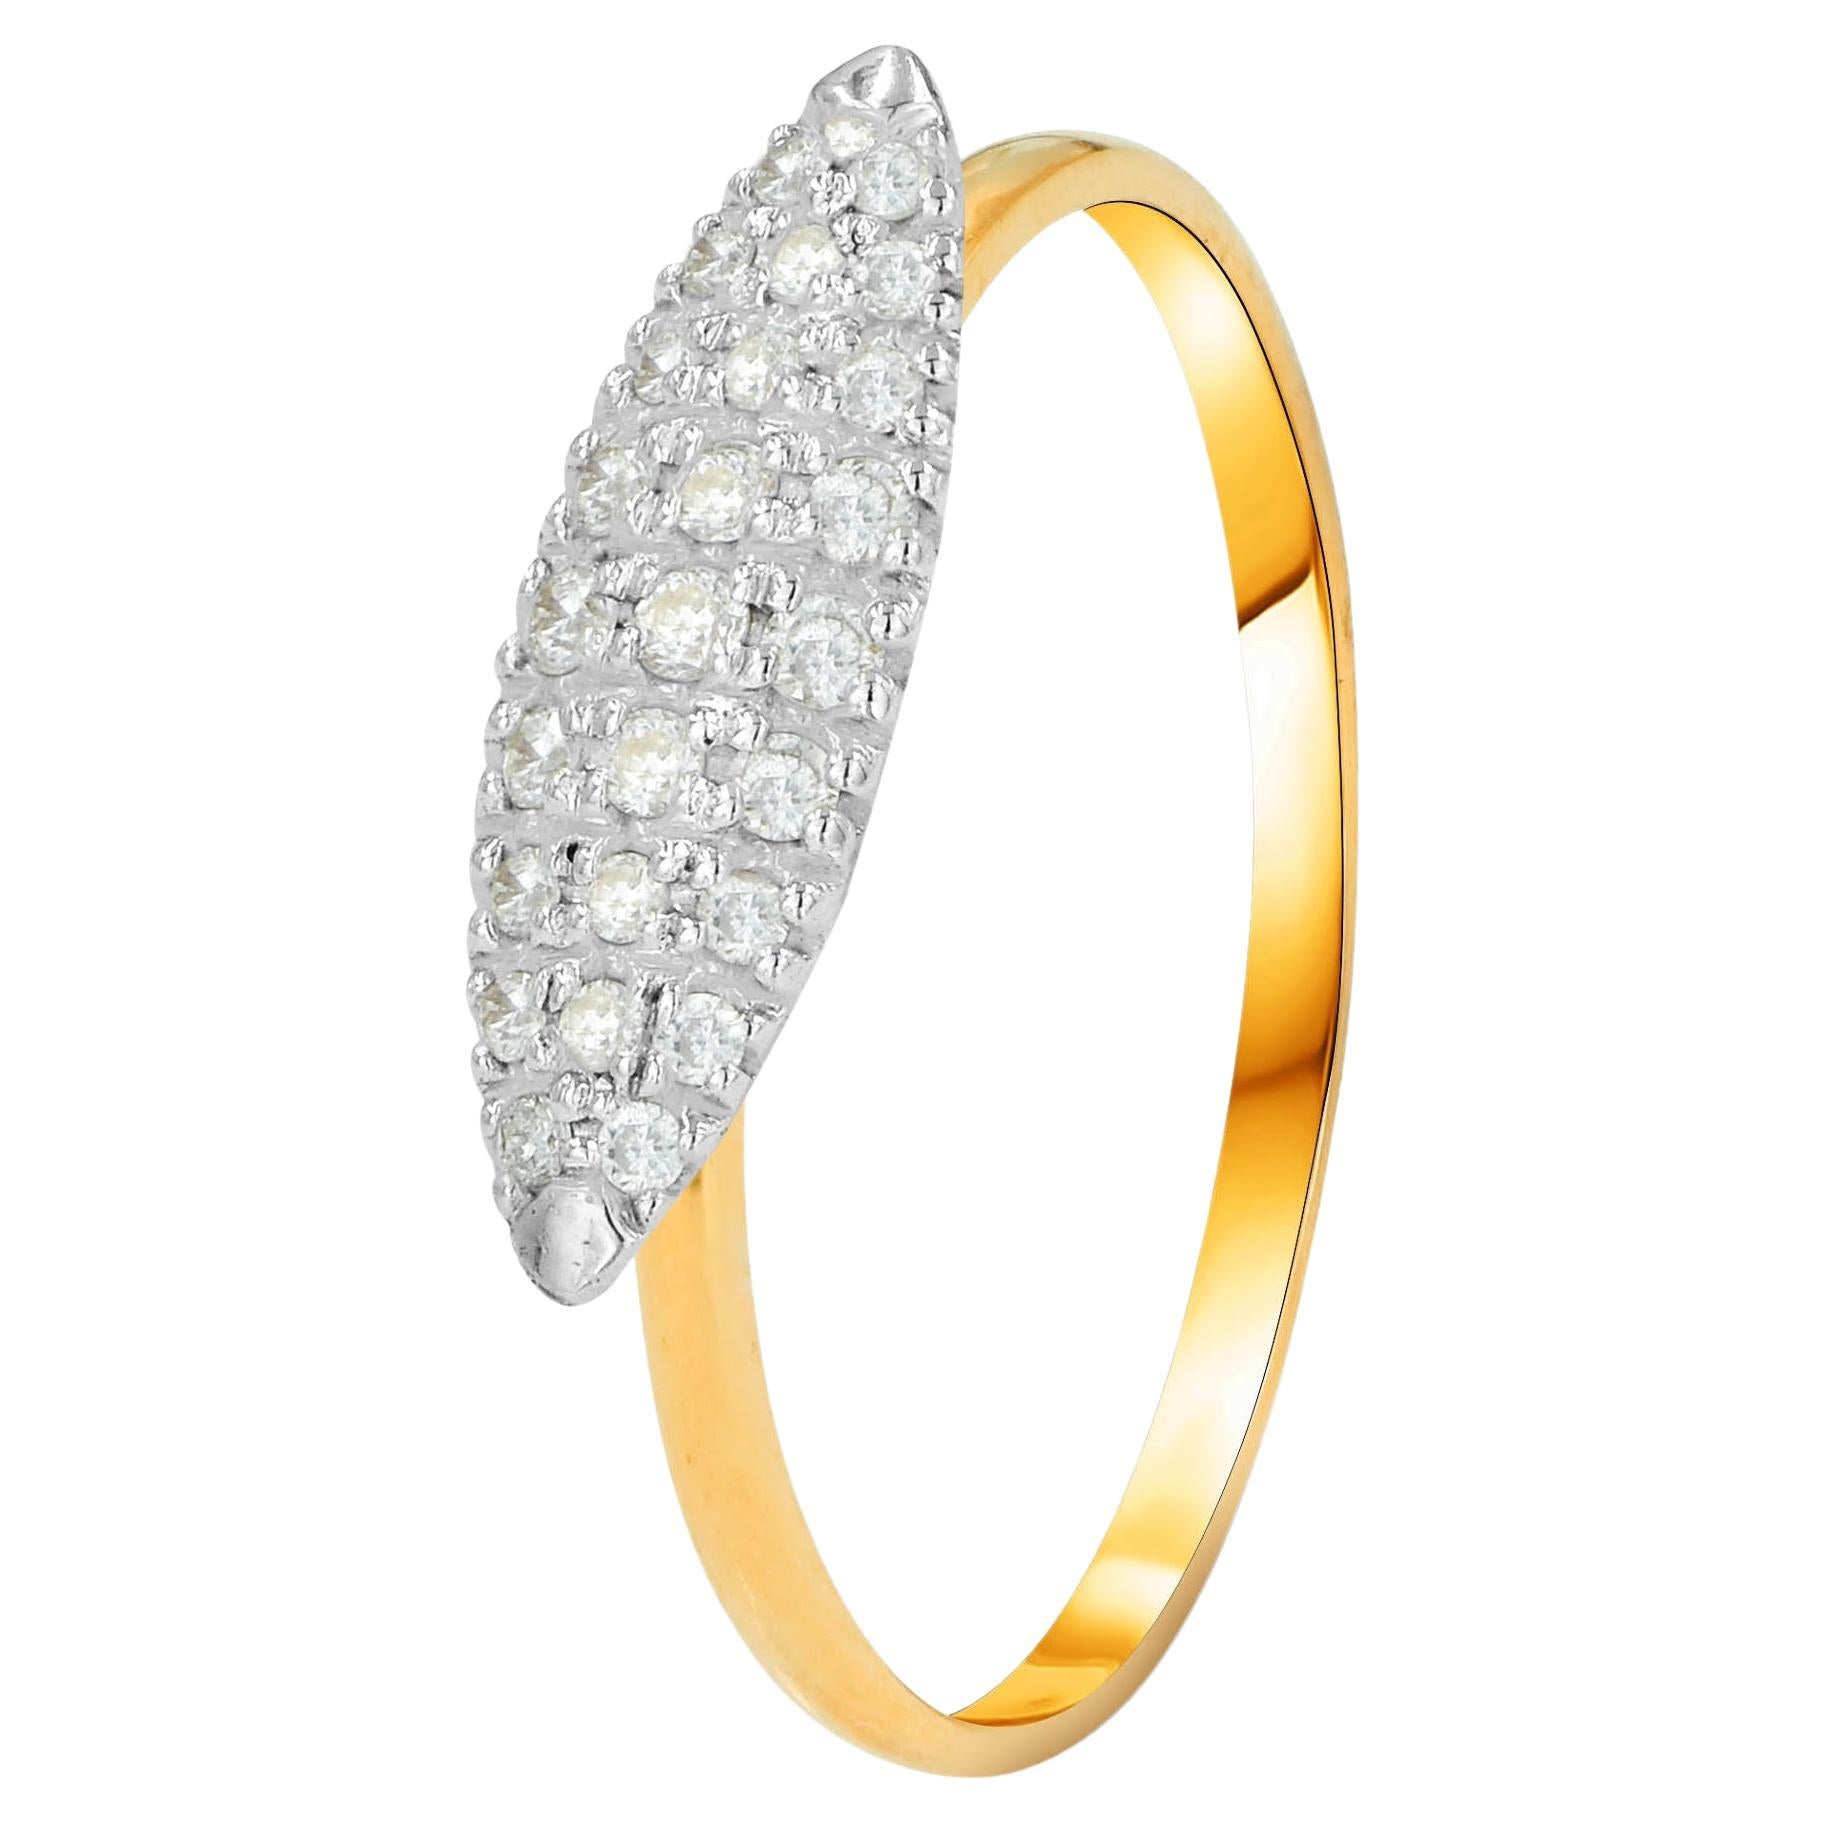 For Sale:  18K Gold 0.23 Carat Diamond Cluster Engagement Ring